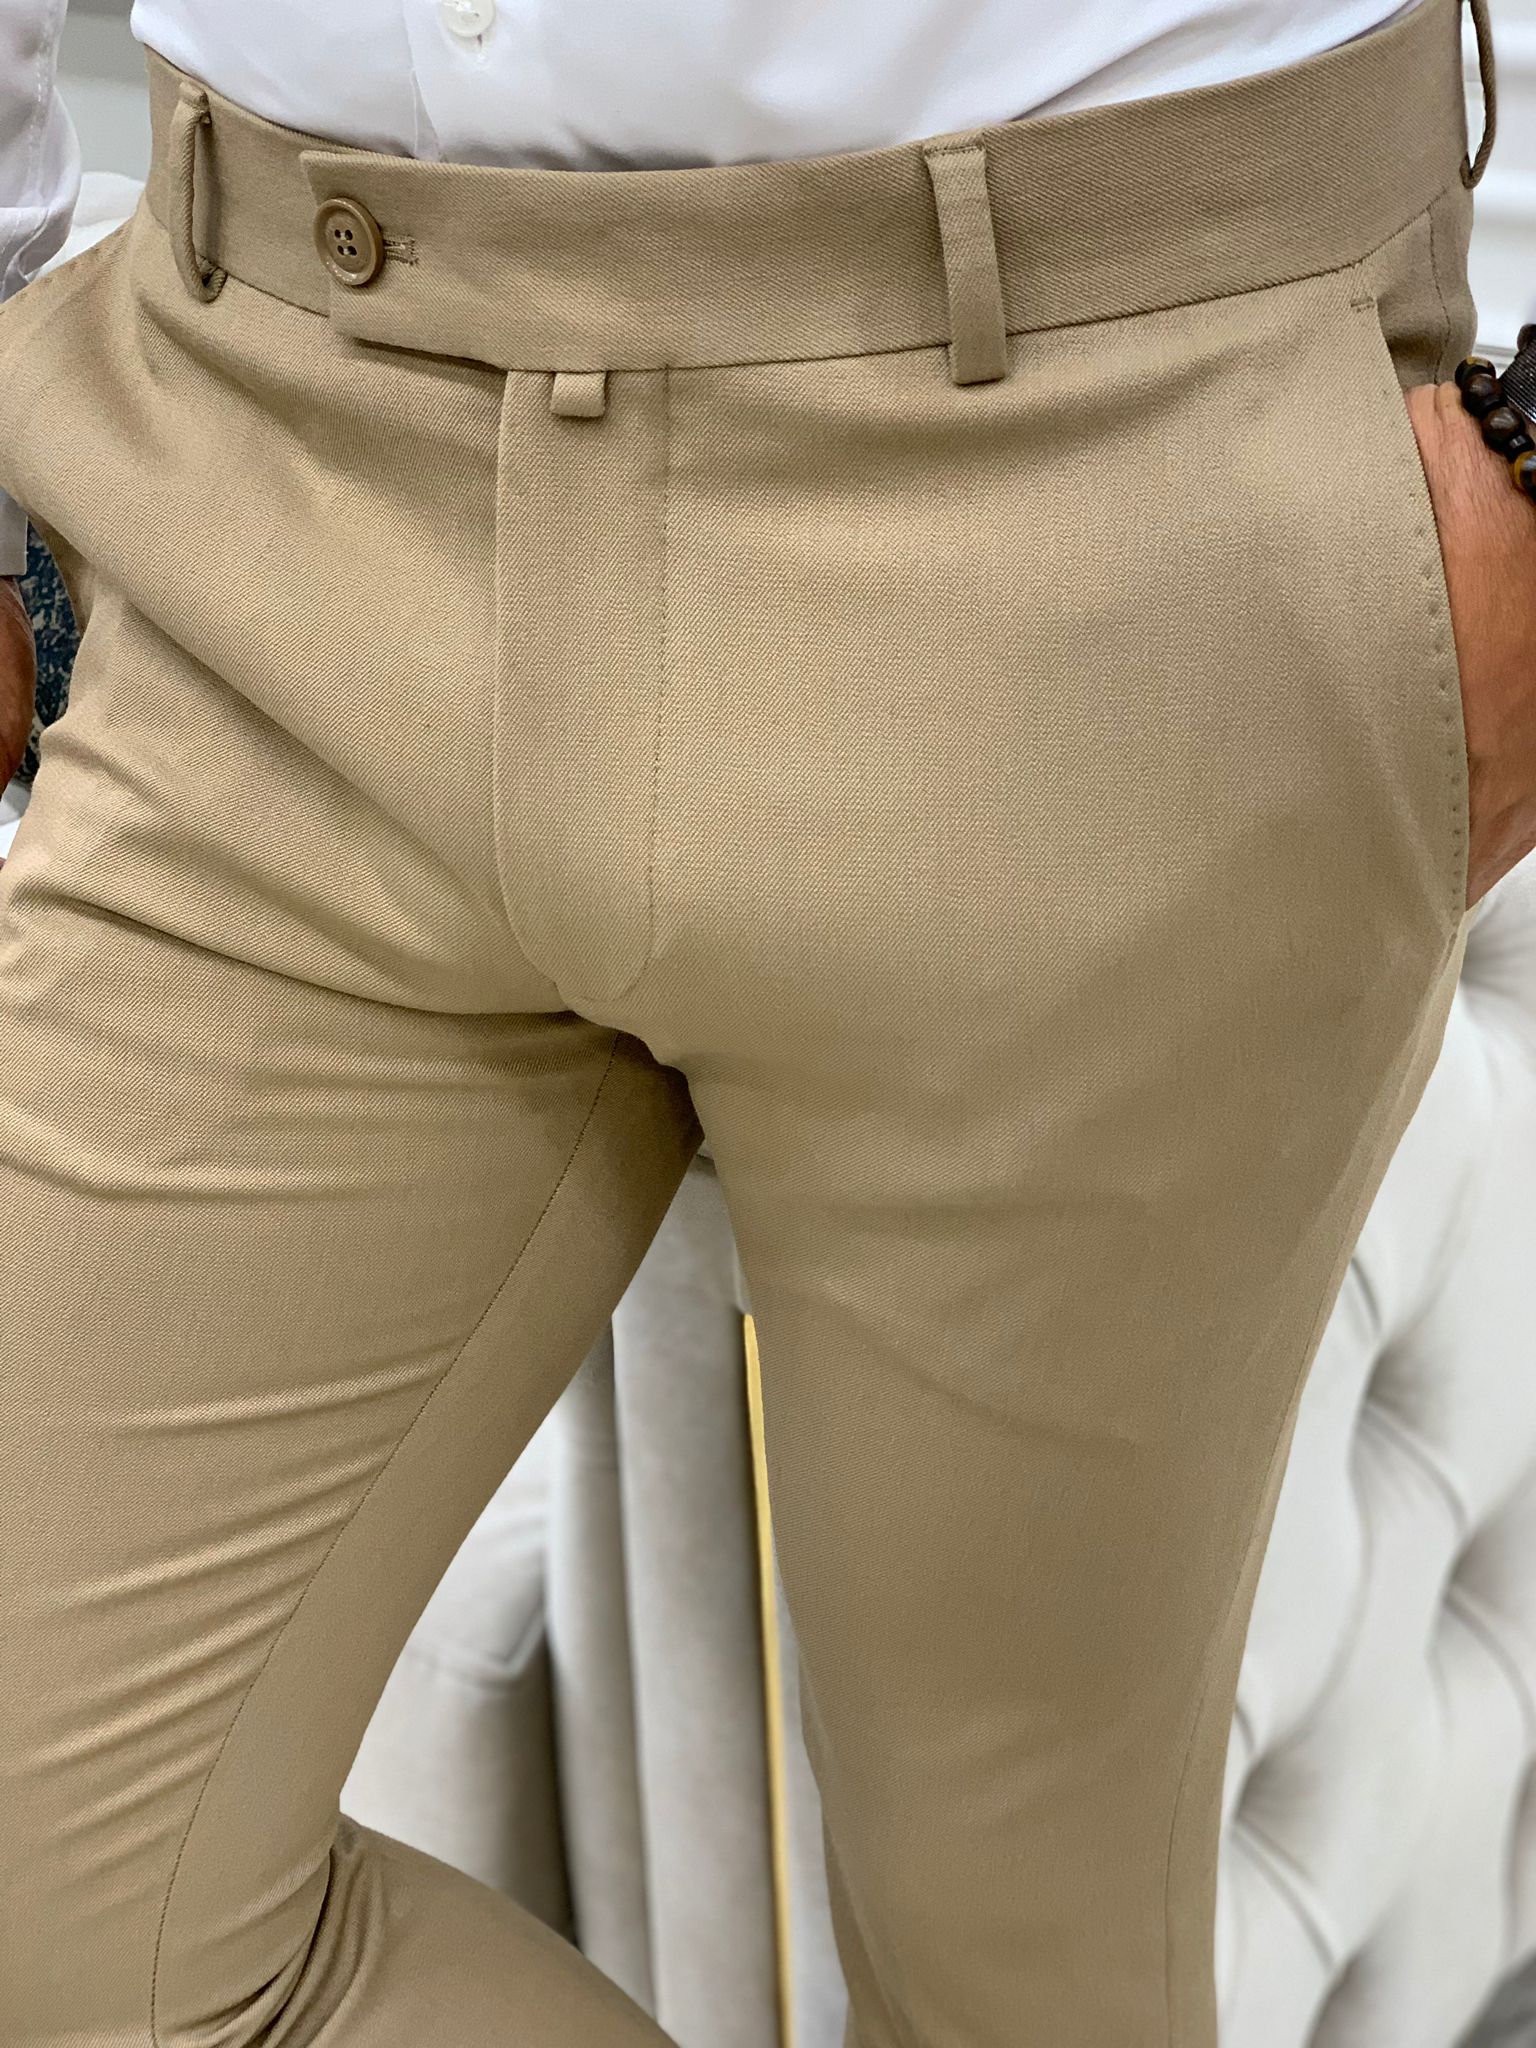 MANCREW Formal Pants For Men - Cream